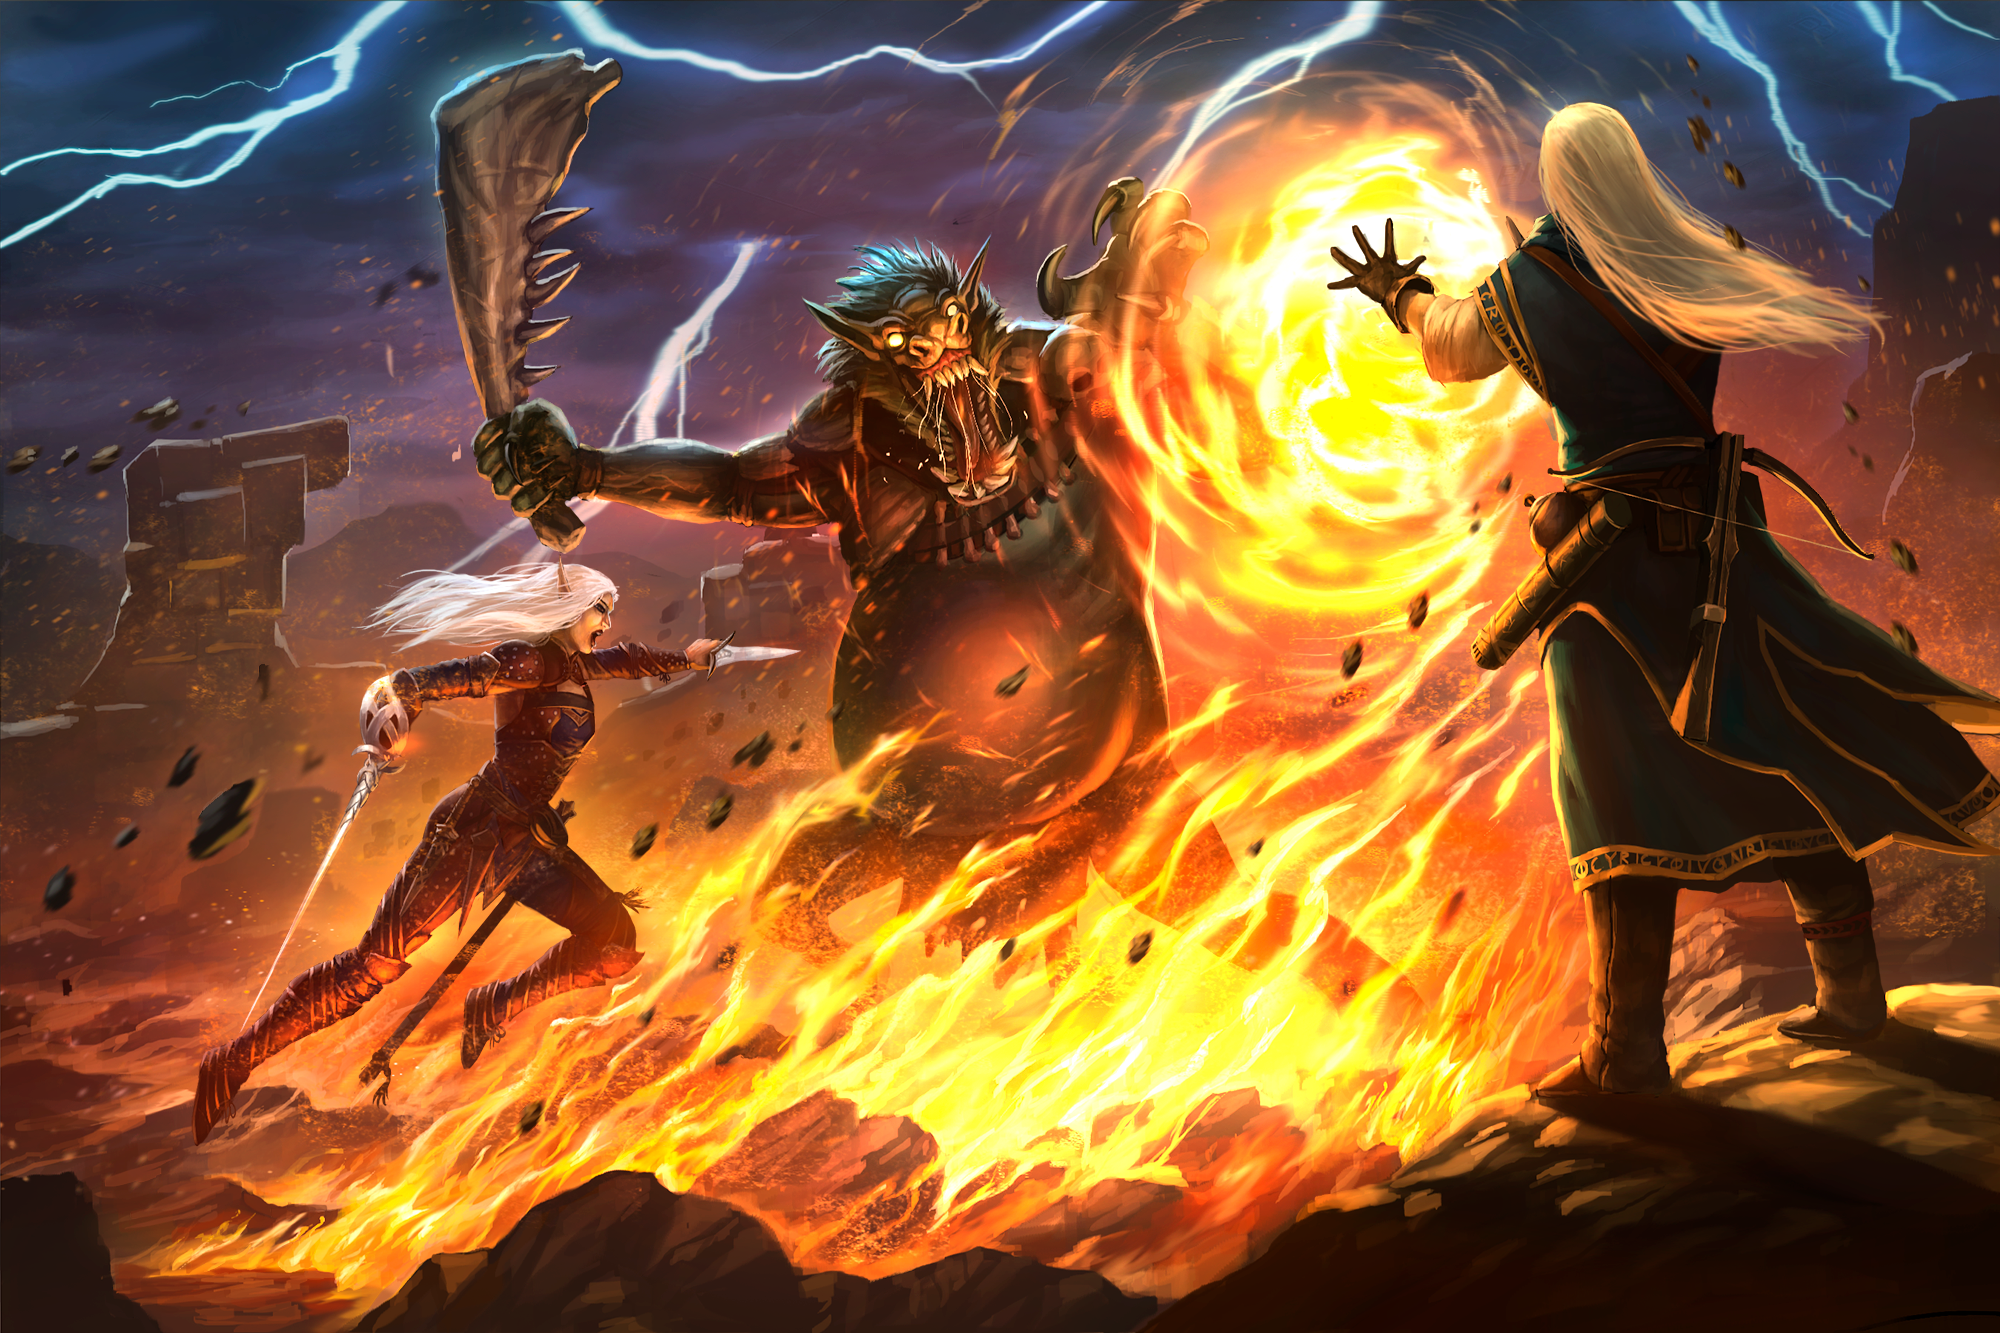 Merisiel and Ezren fighting a troll on a stormy night